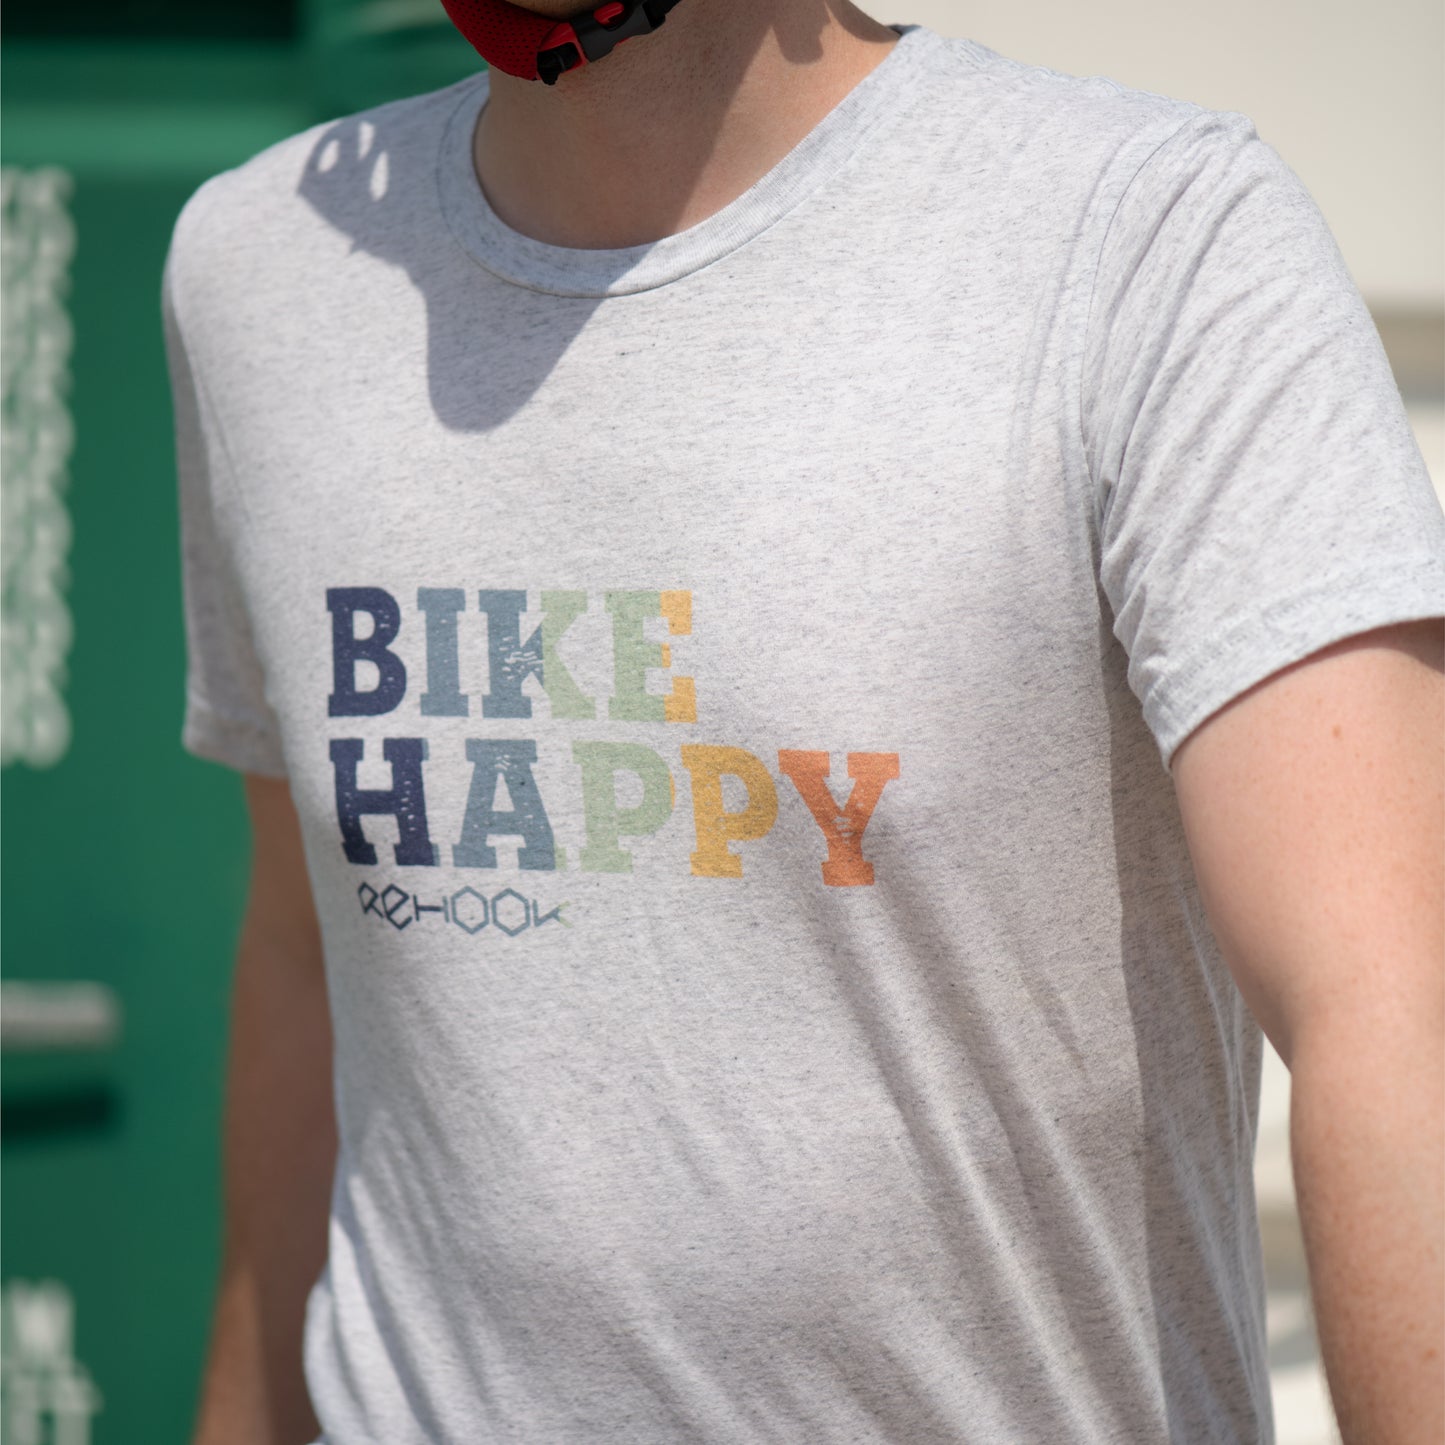 Rehook Bike Happy Pastel Men's Tri-Blend Tee - White